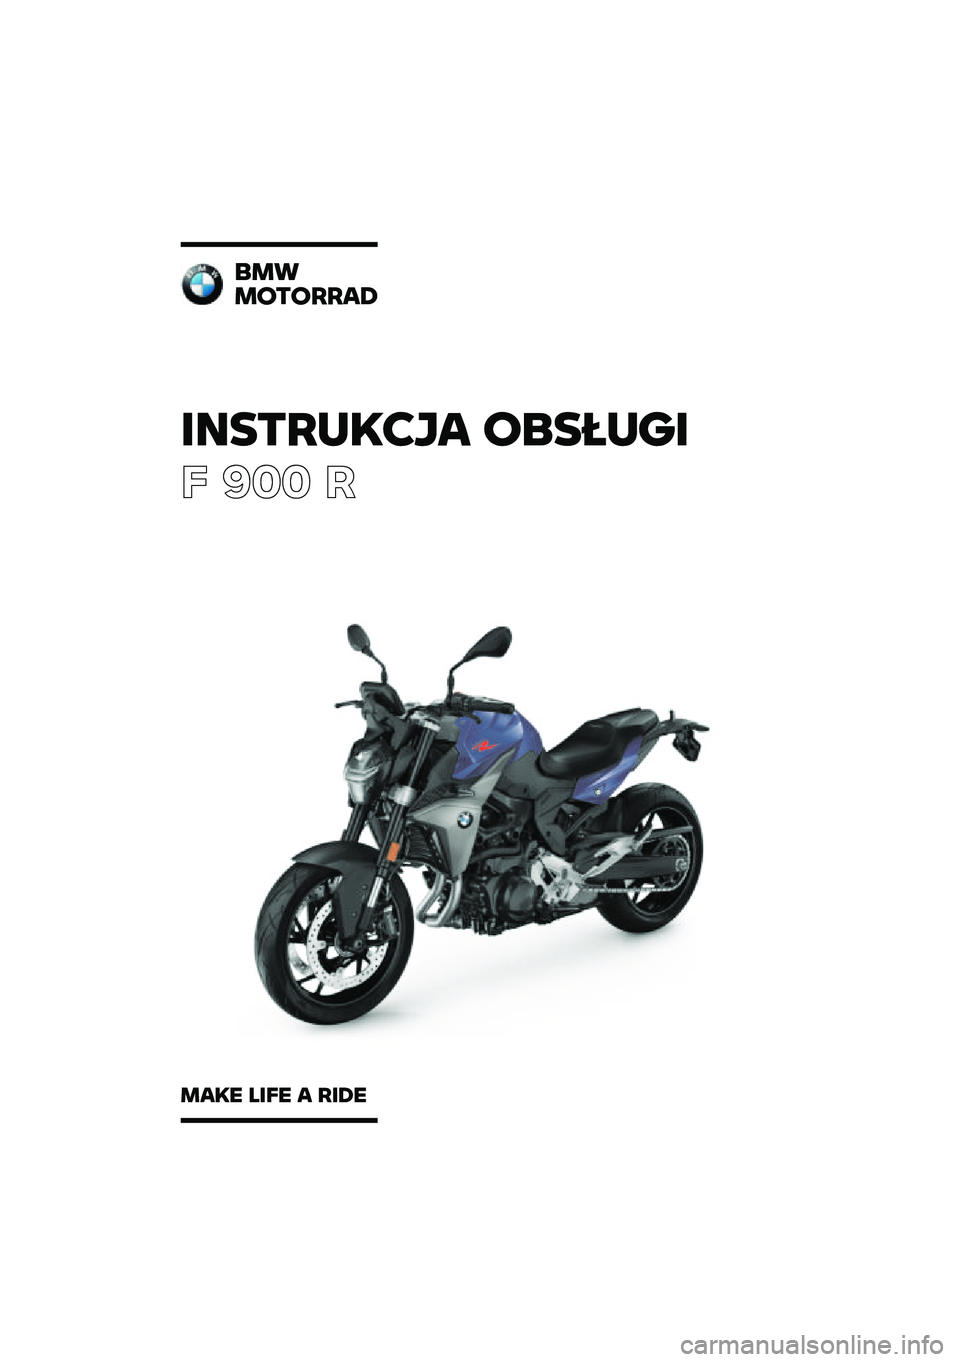 BMW MOTORRAD F 900 R 2020  Instrukcja obsługi (in Polish) �������\b�	�
� �\f�
�����
� ��� �
�
��
��\f��\f����
���\b� ���� � ���� 